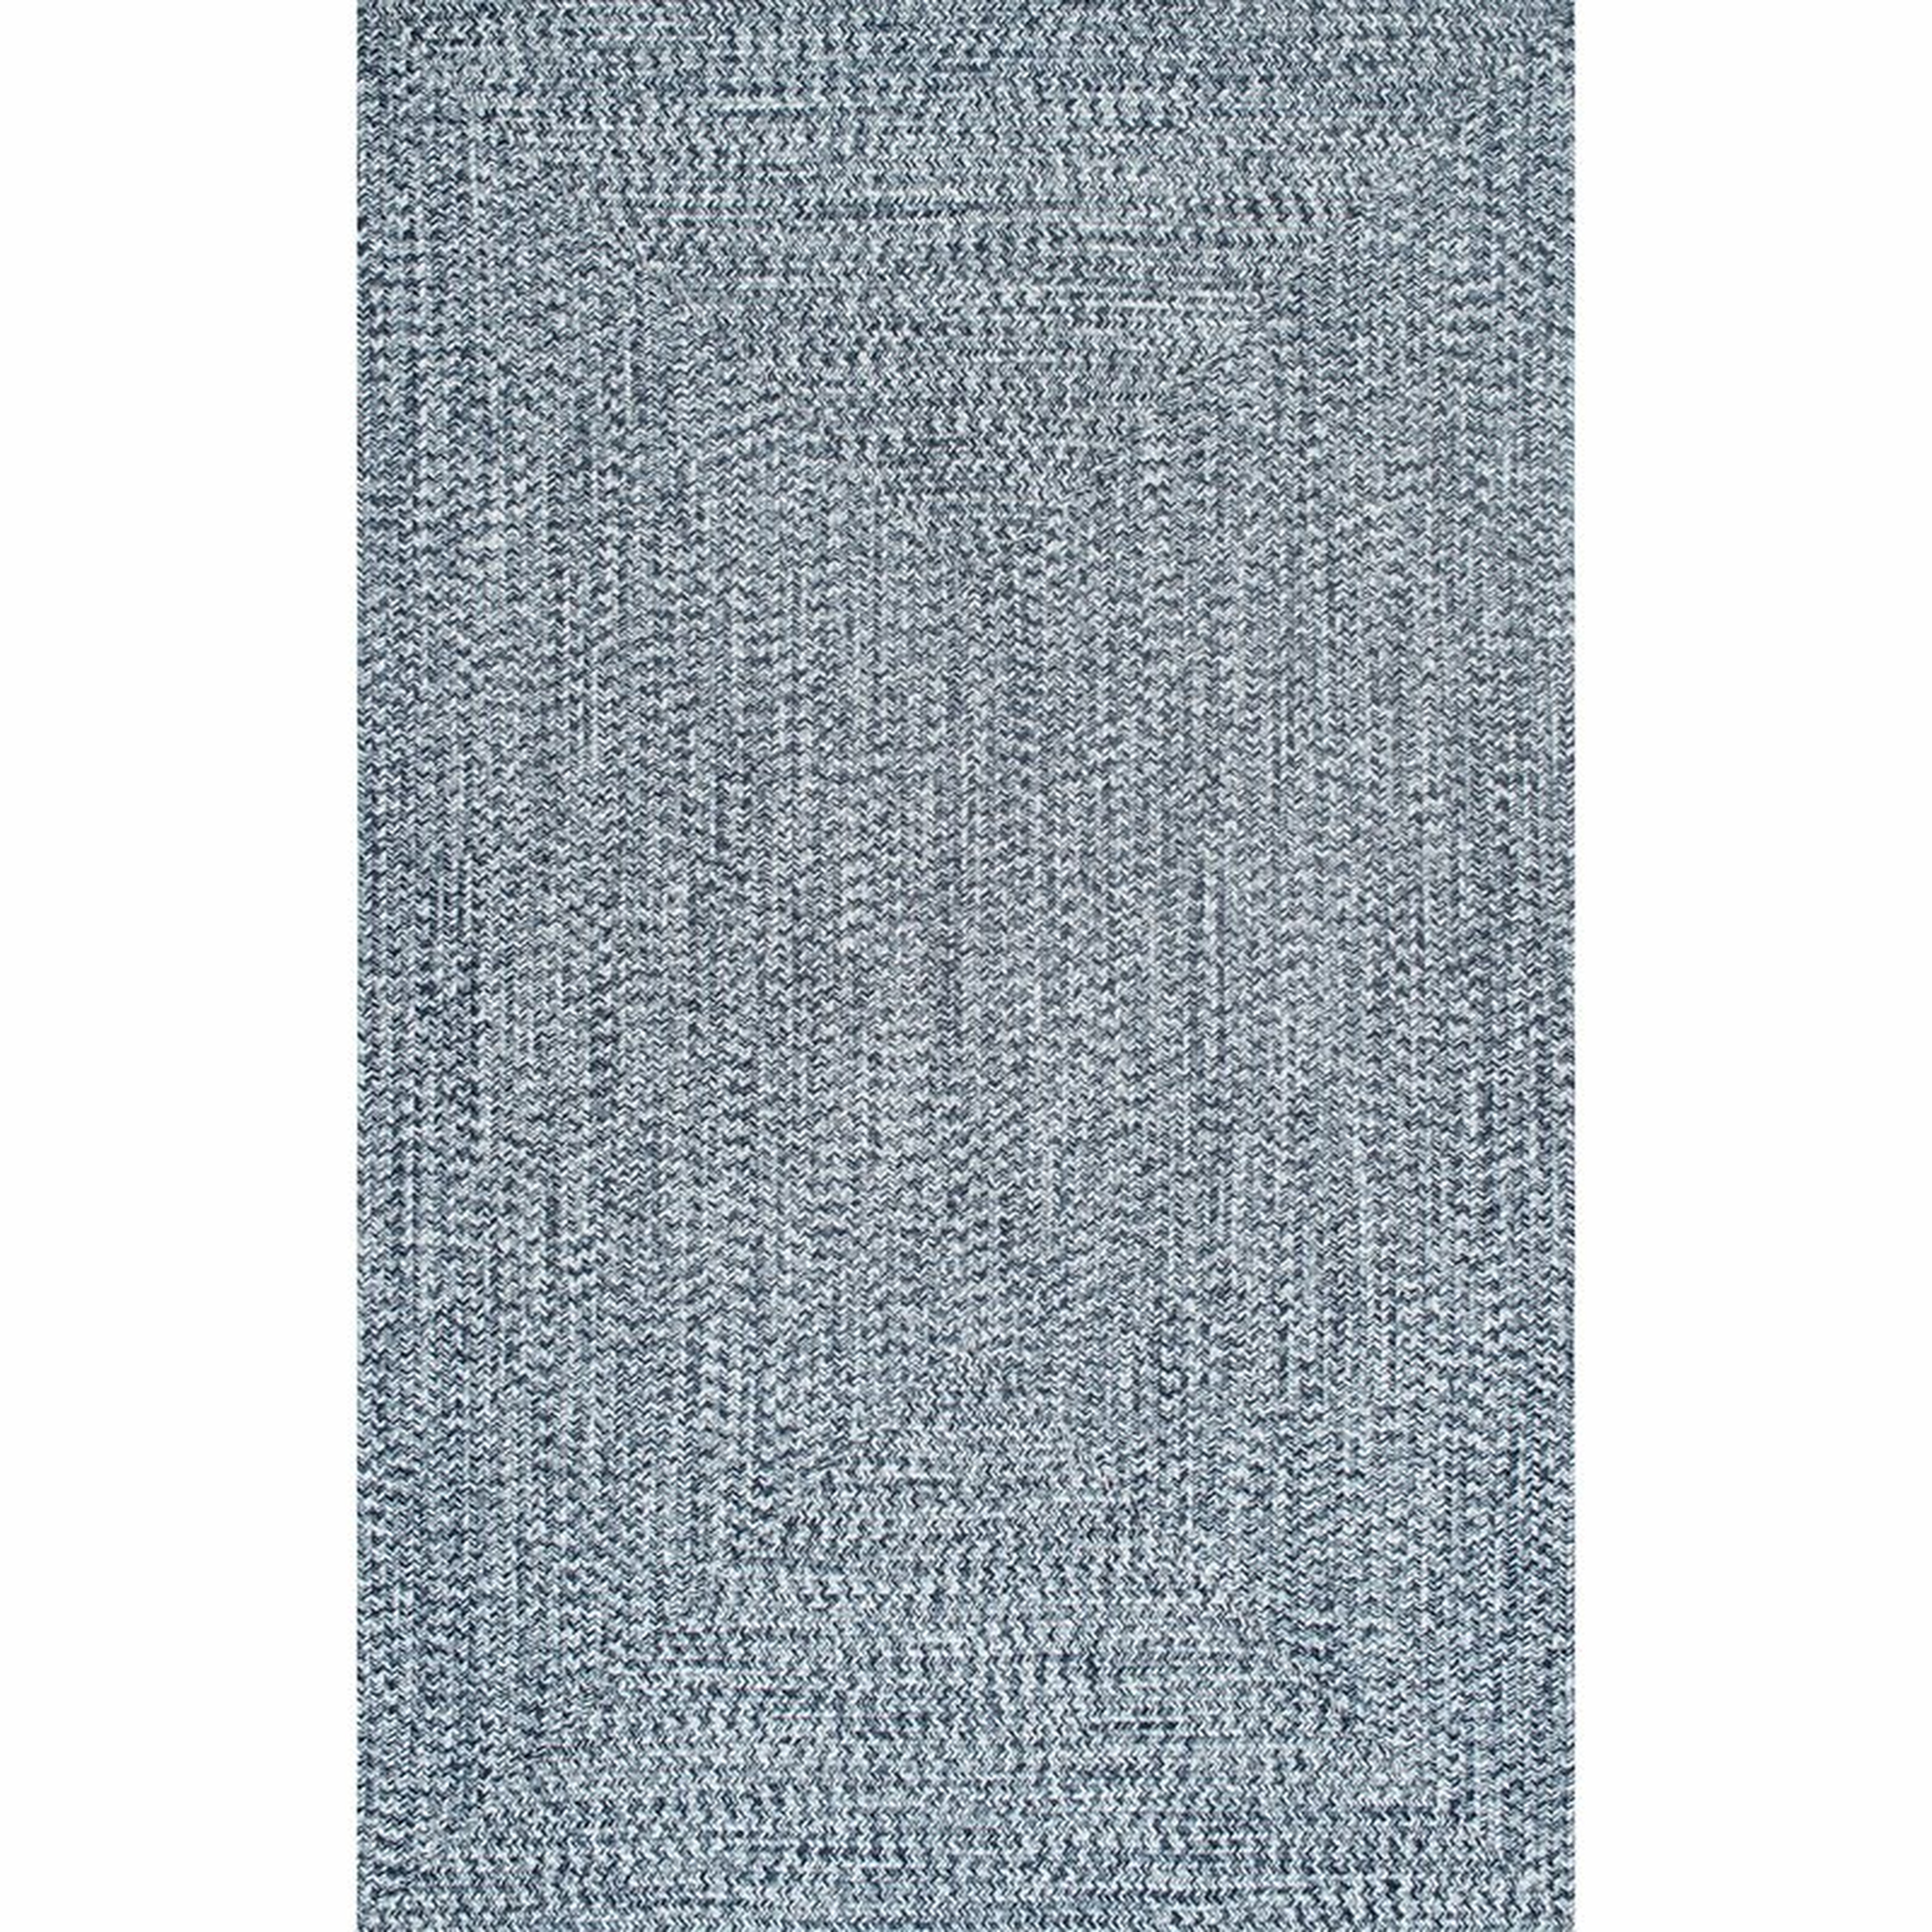 Braided Striped Handmade Medium Blue/Off-White Indoor / Outdoor Area Rug - Wayfair